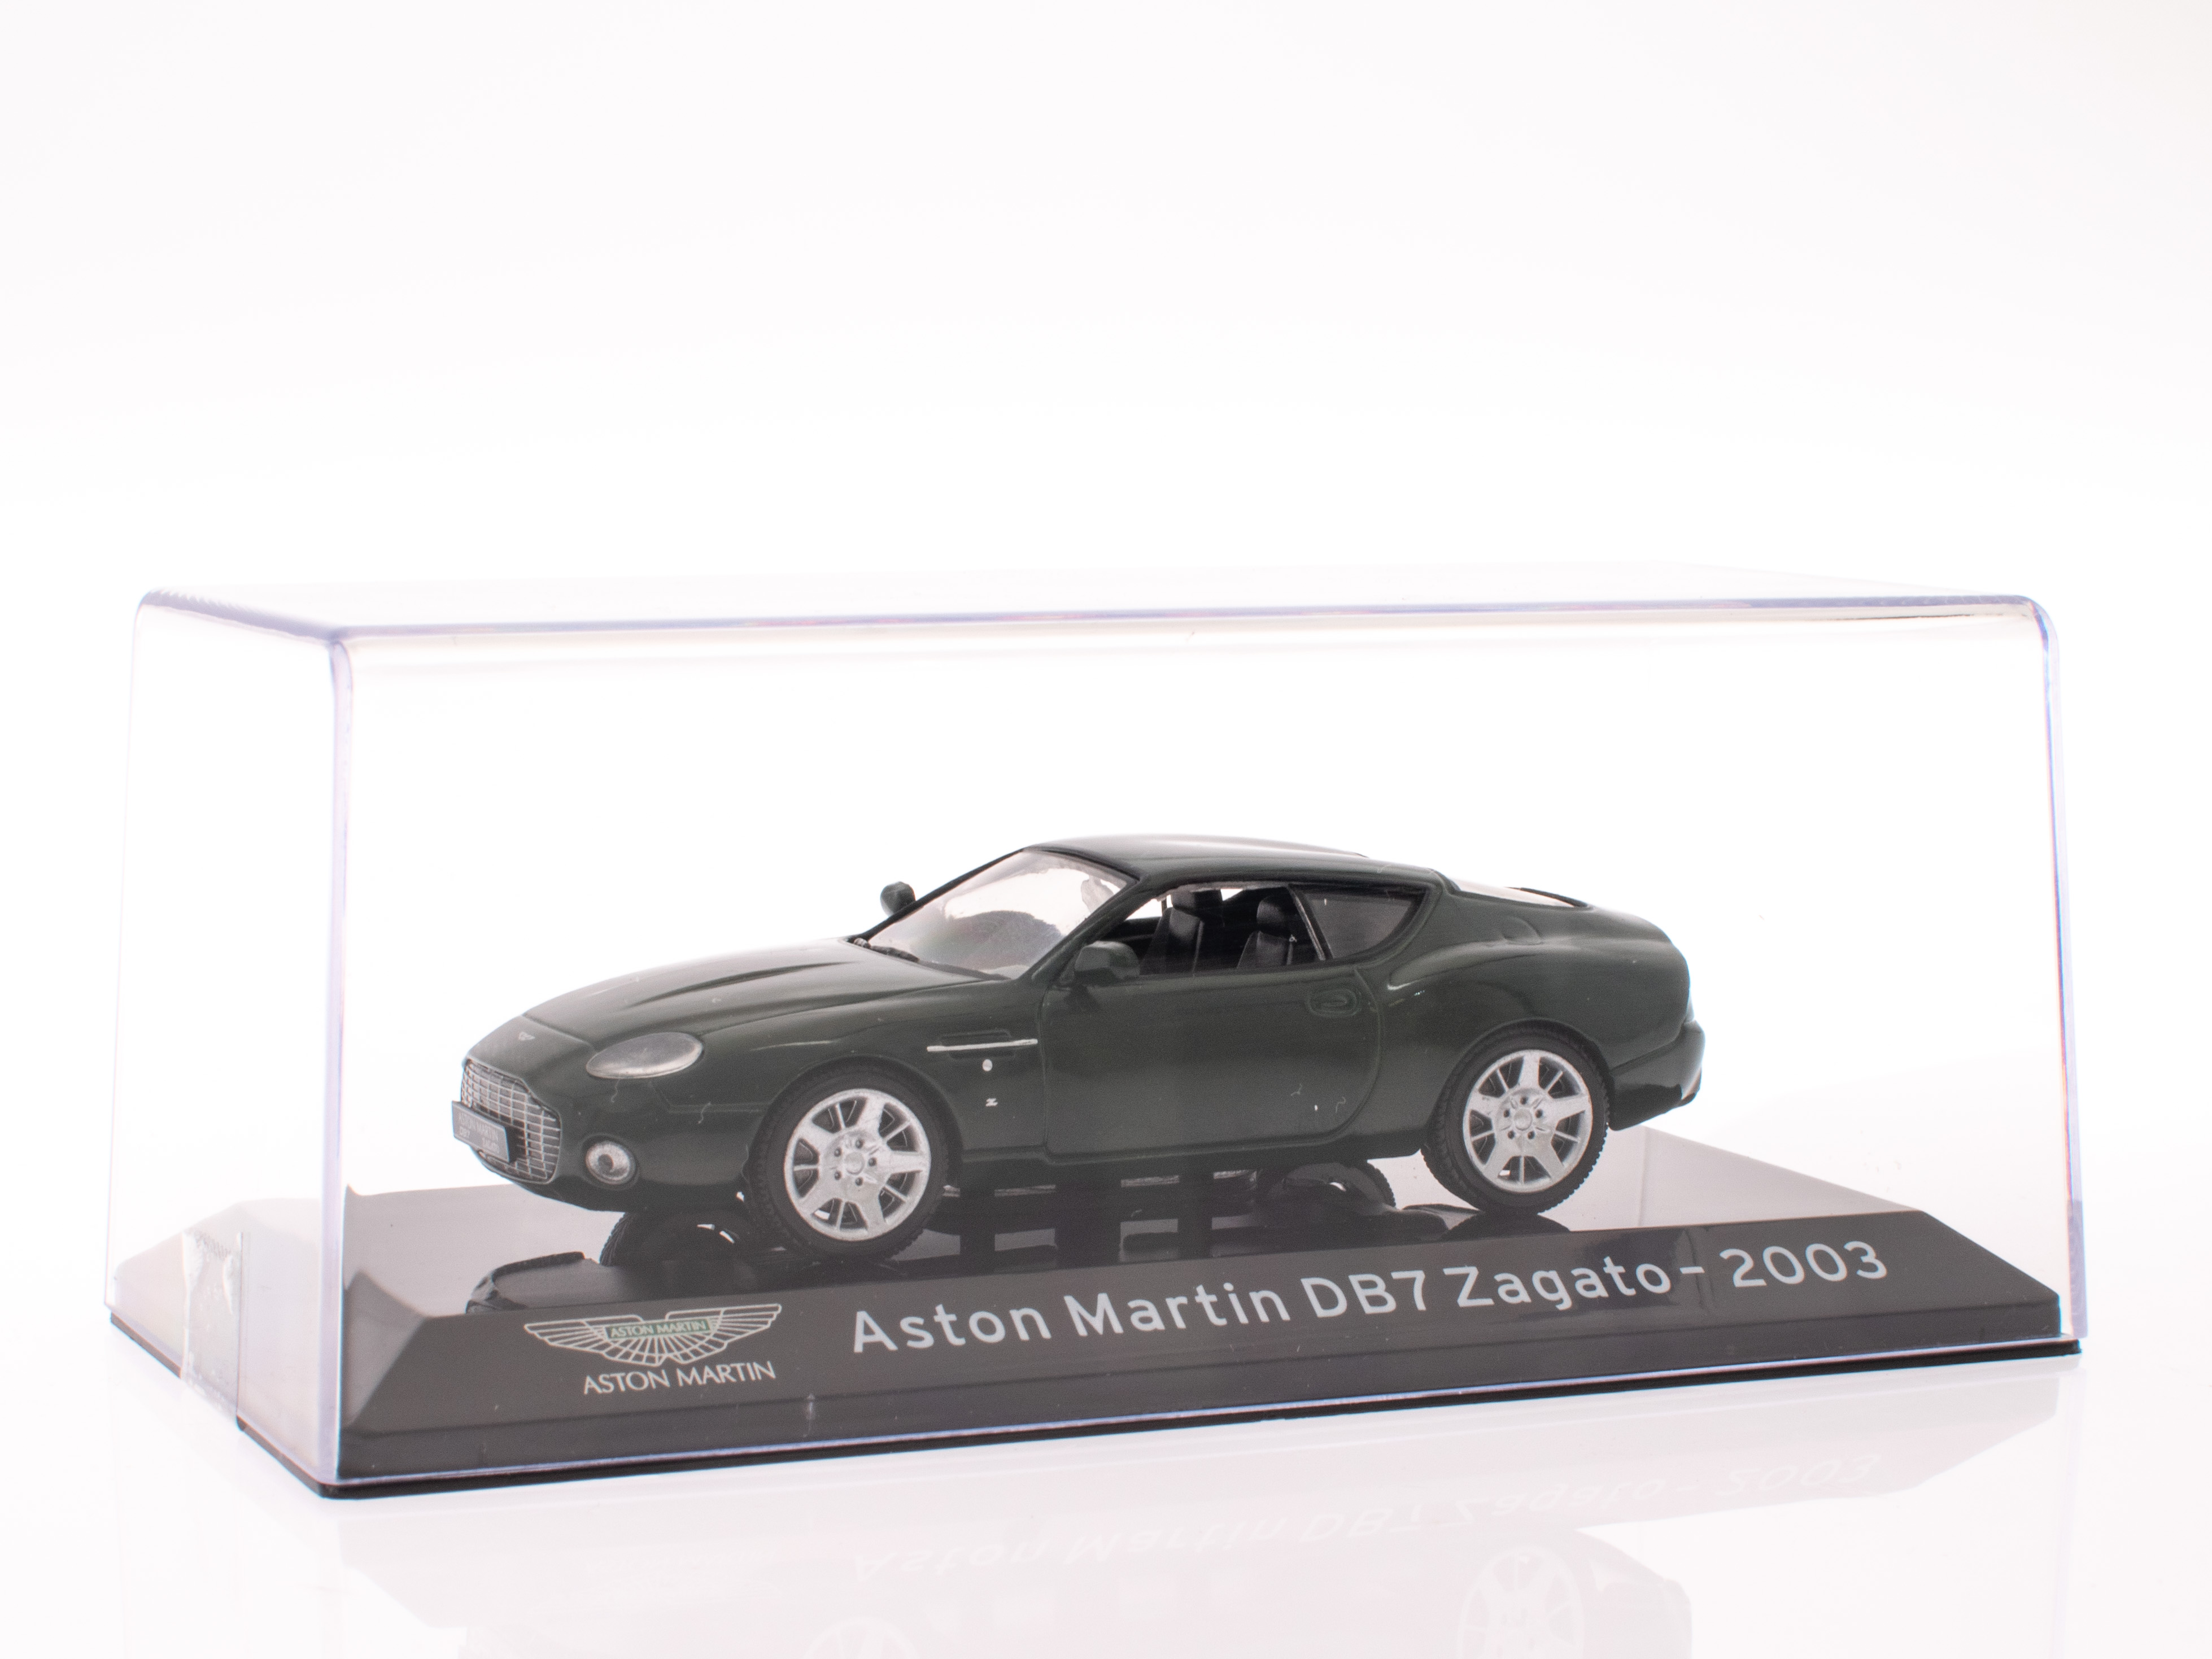 Aston martin DB7 Zagato - 2003